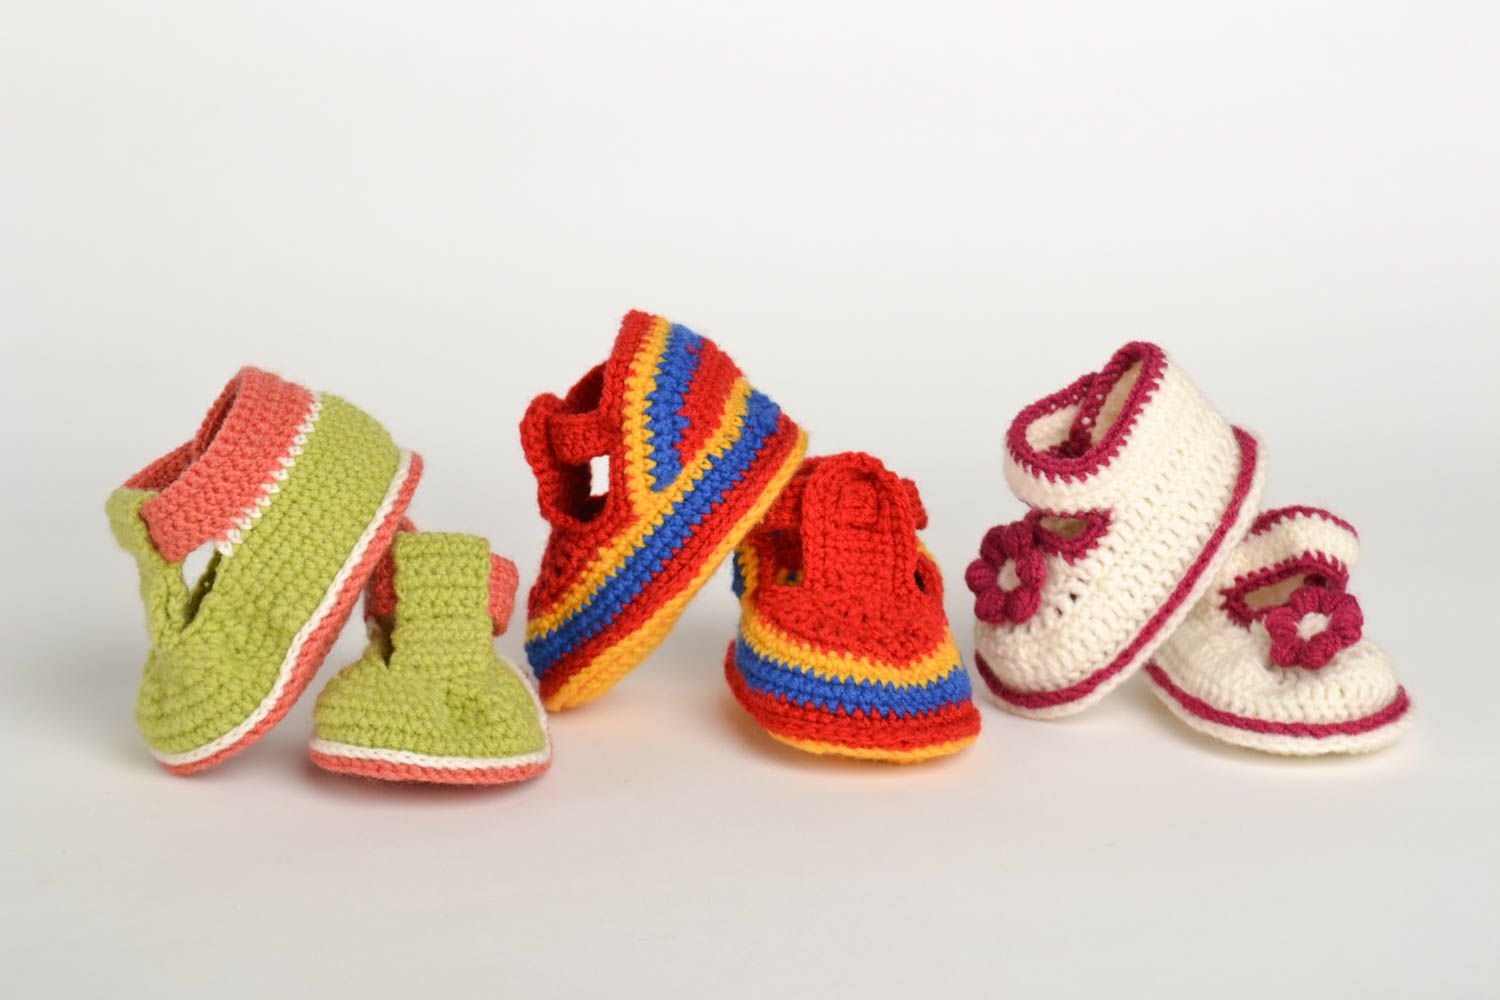 Beautiful handmade baby bootees crochet baby booties fashion kids small gifts photo 2